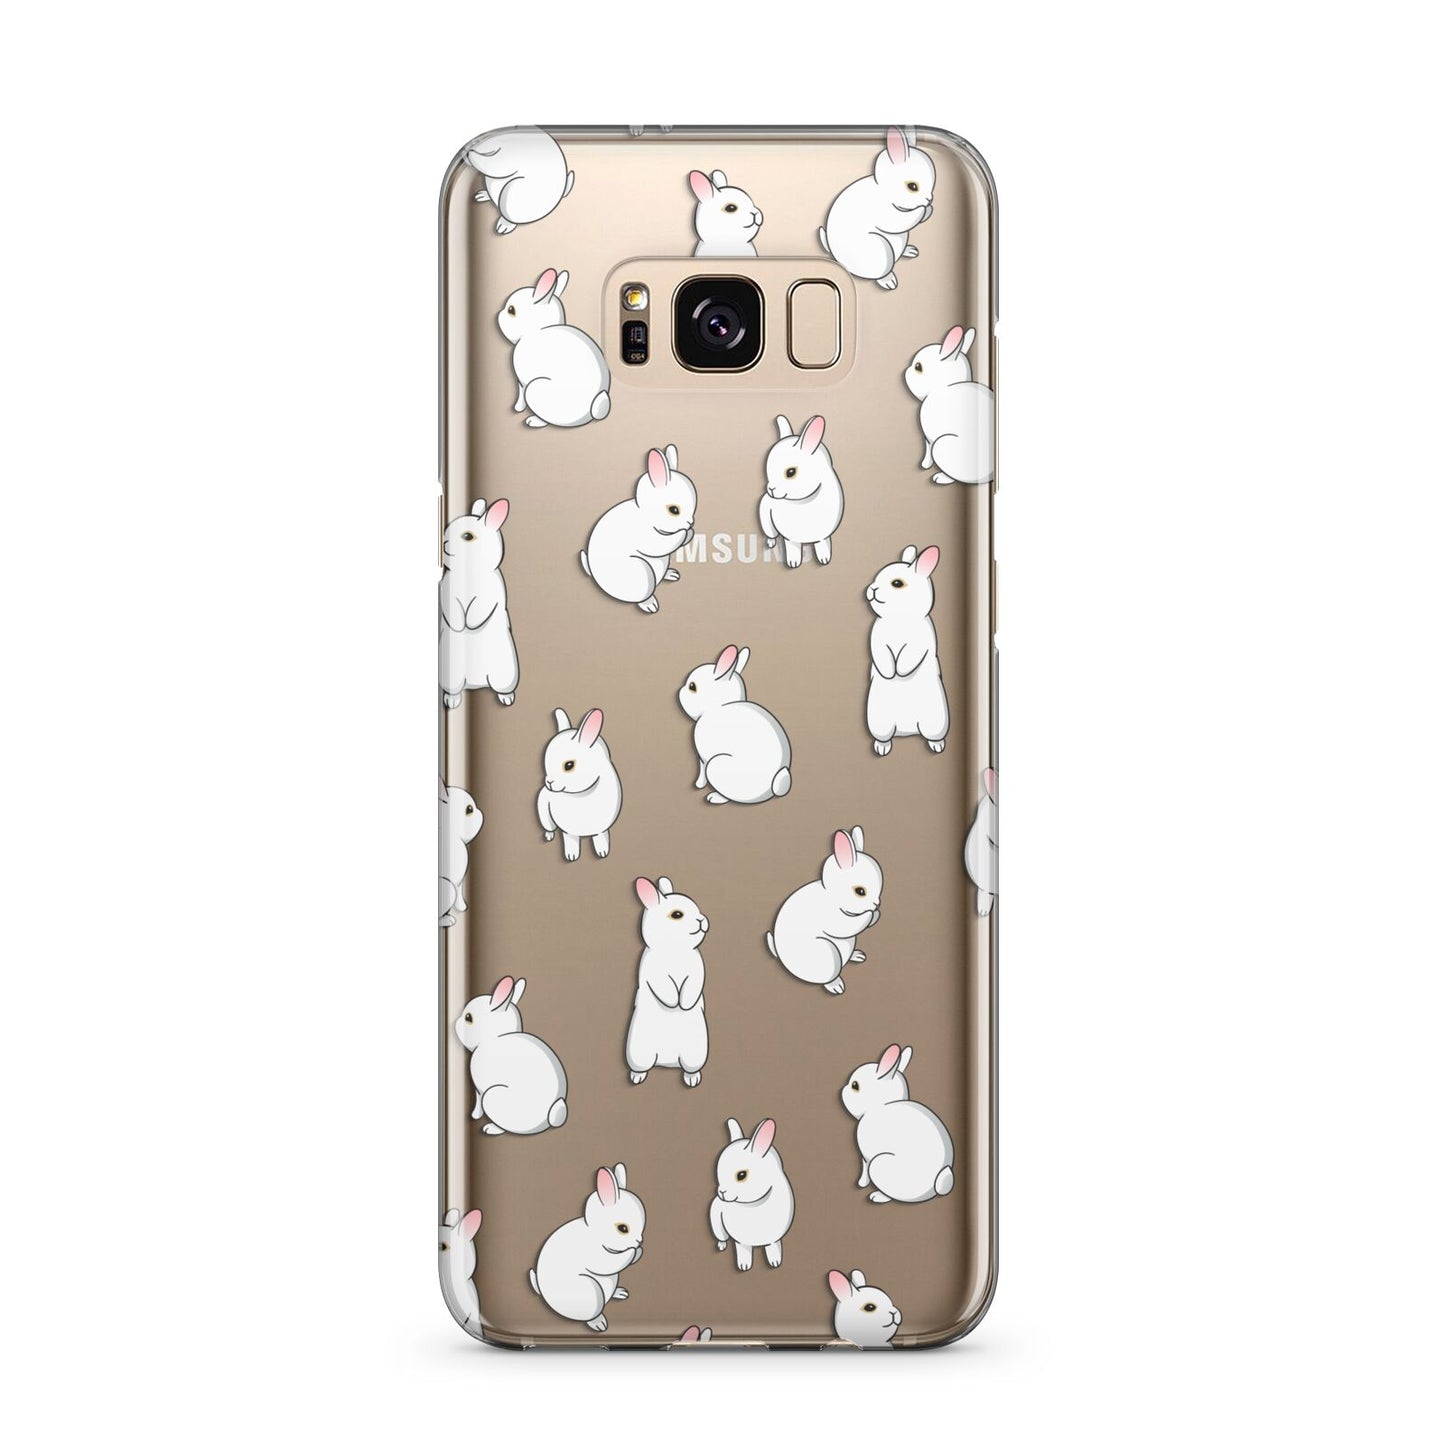 Bunny Rabbit Samsung Galaxy S8 Plus Case